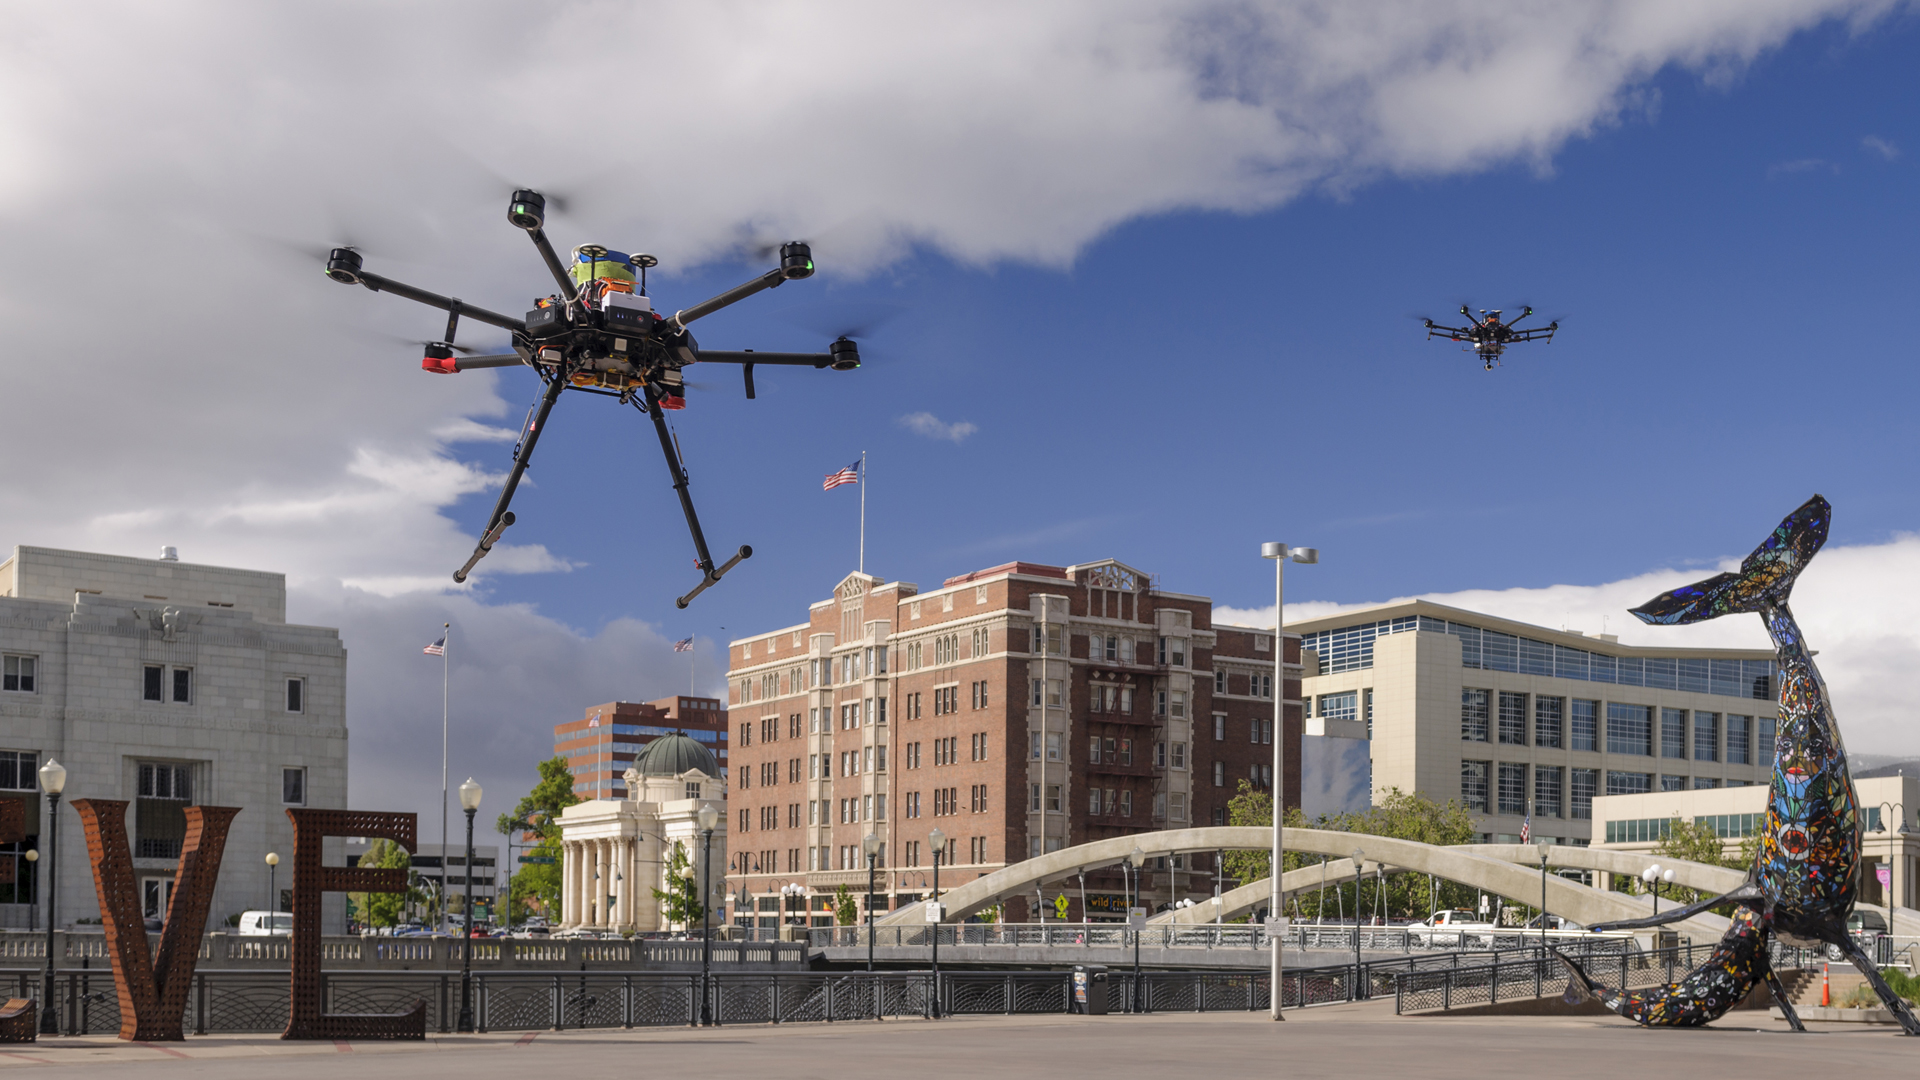 Drones in flight in downtown Reno, Nevada.